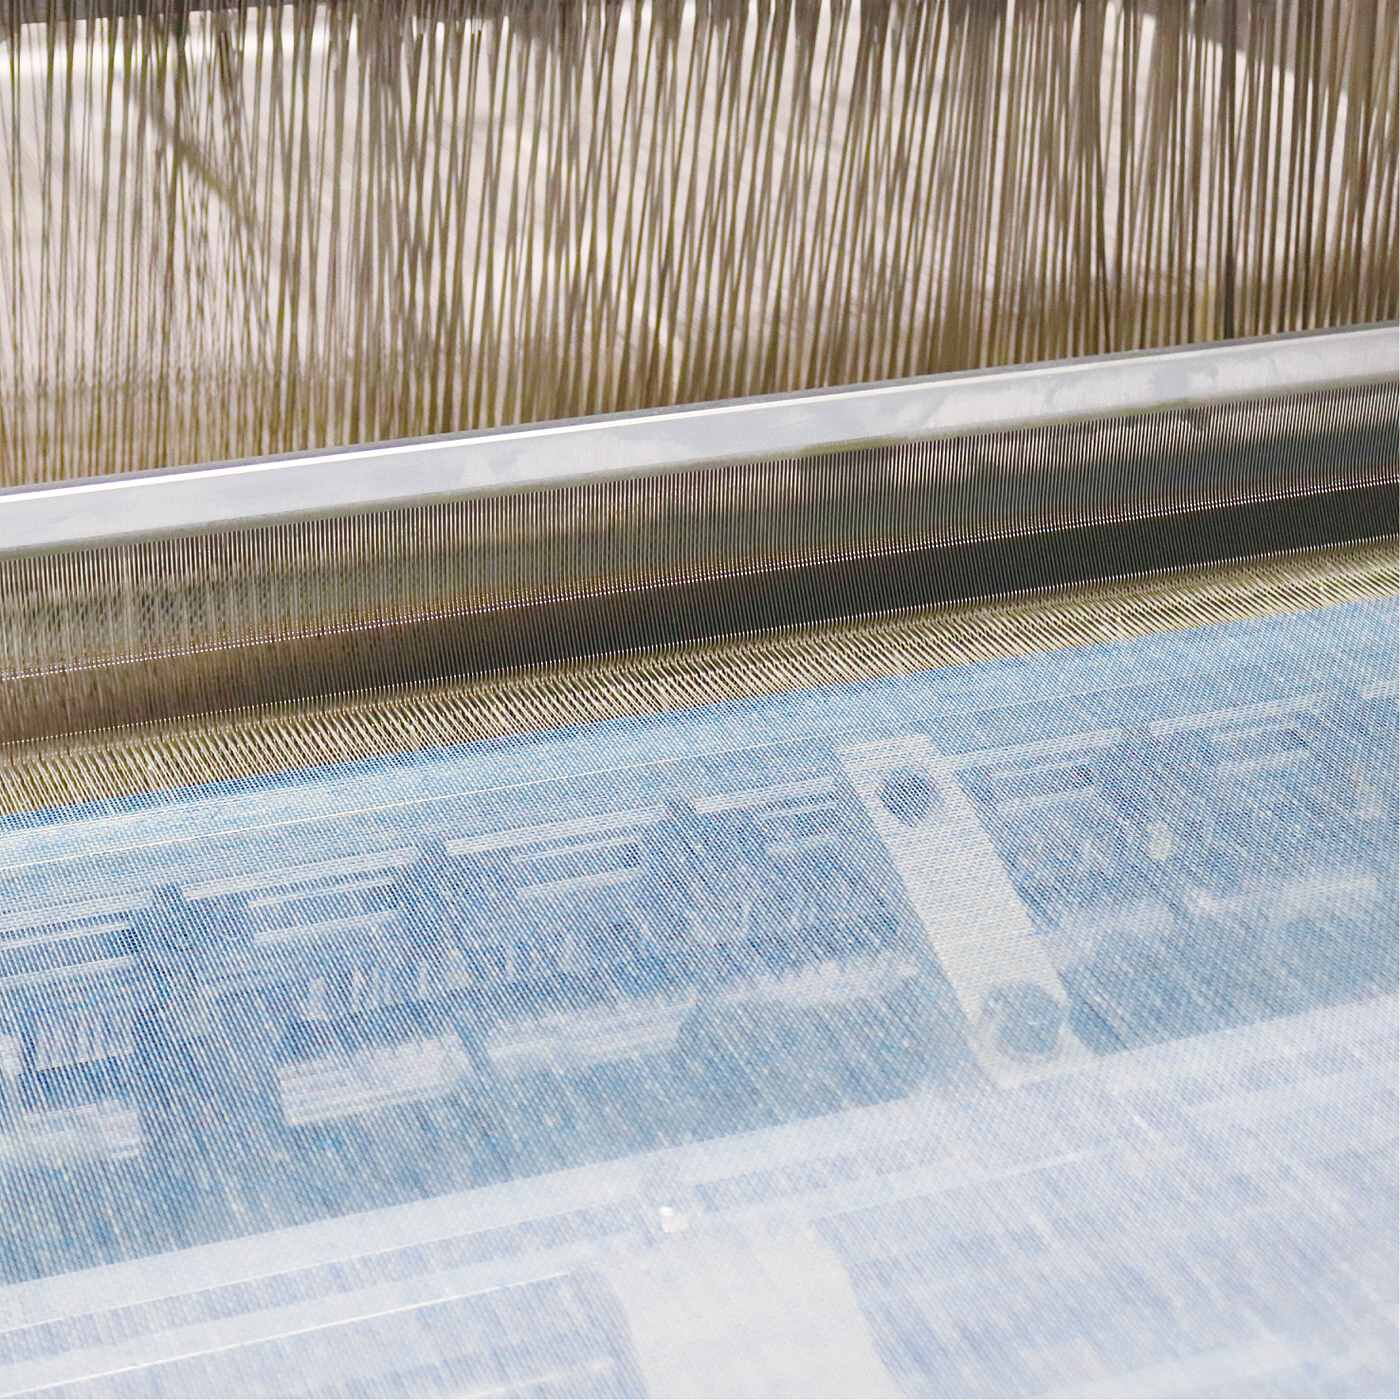 el:ment|el:ment　奈良の笹田織物さんが織り上げる　軽やかでやわらかな着け心地　コットン１００％大判かや織りストールの会|100年以上かや織りの製造を続けている笹田織物株式会社さんに織っていただきました。その名のごとく古くから蚊帳に使われてきたかや織りは、目の粗い平織りゆえの通気性のよさが特徴です。